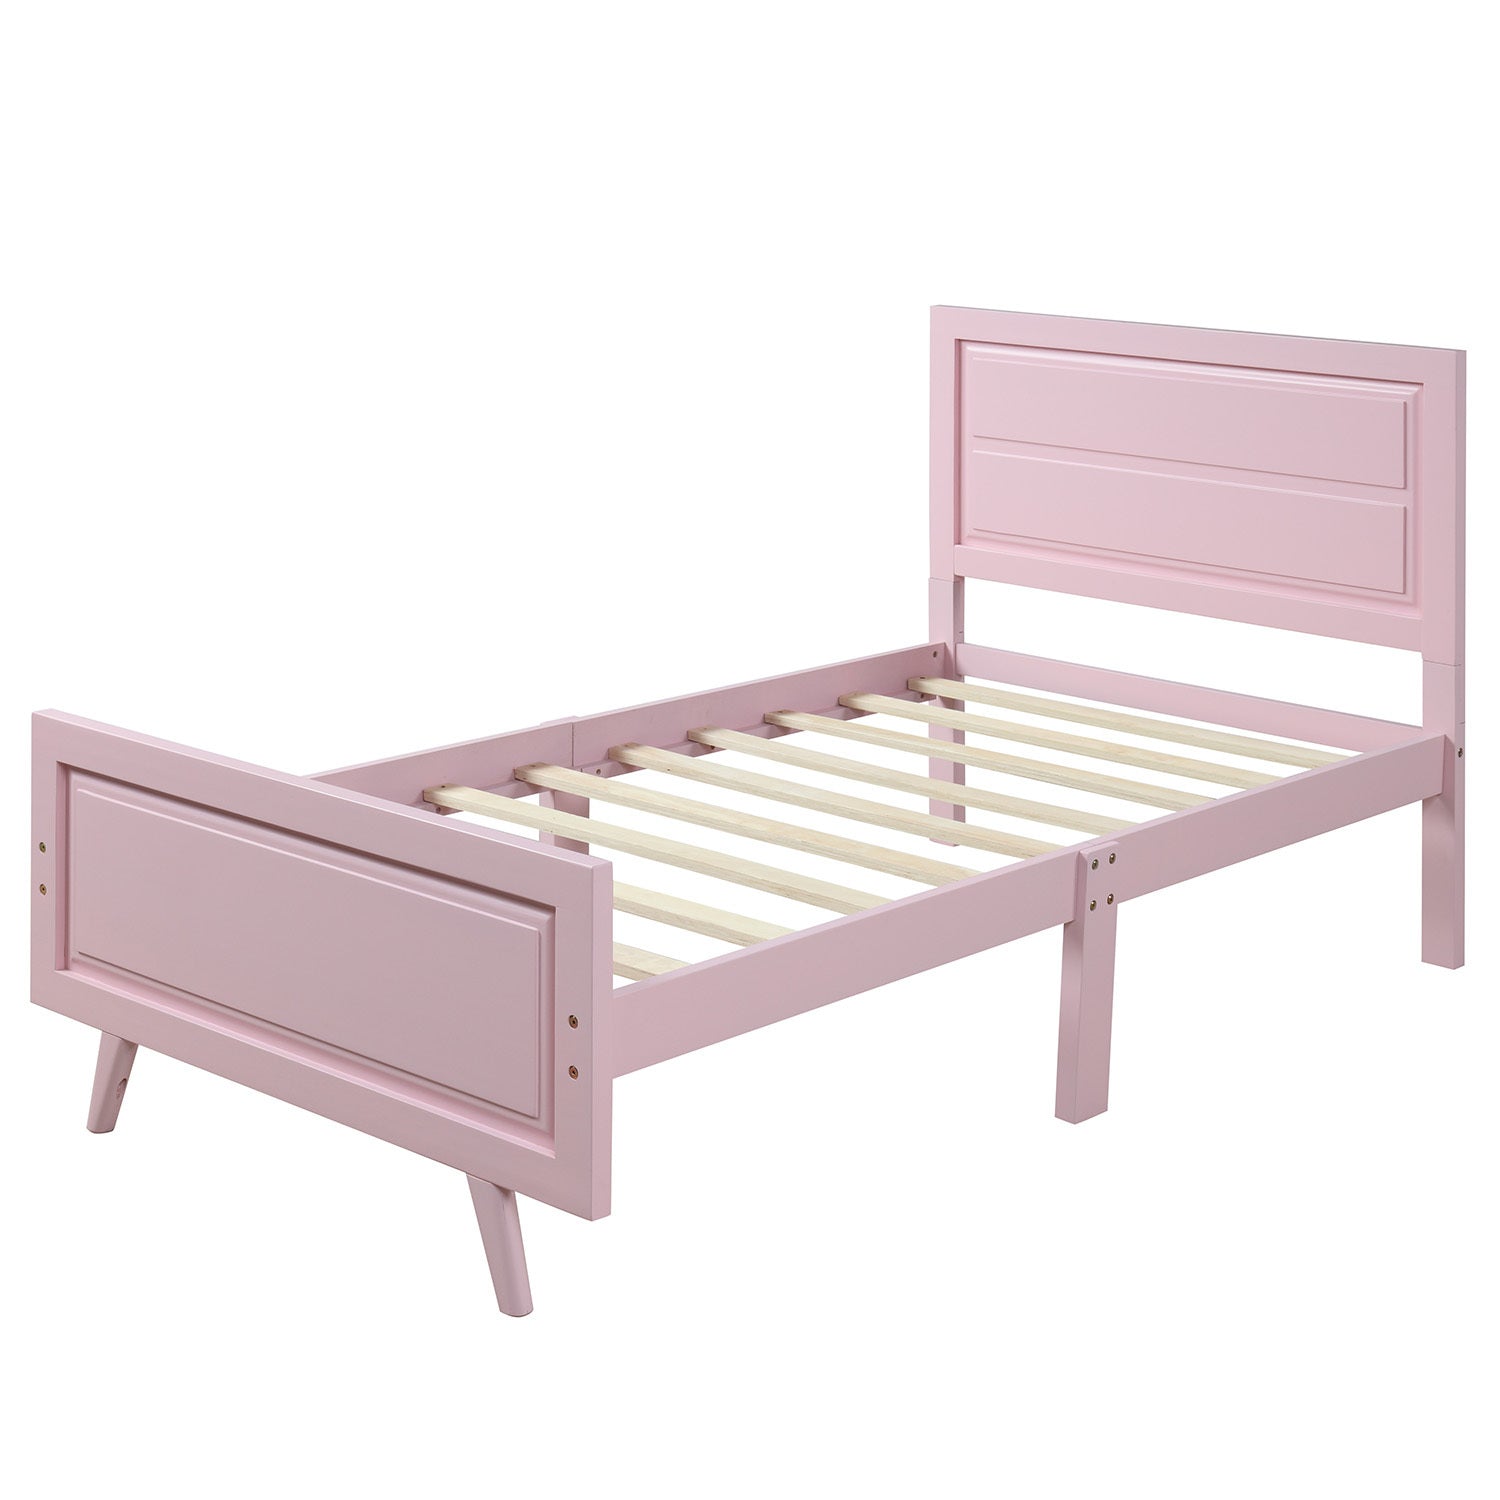 Wood Platform Twin Bed Frame with Headboard | Pink Finish | Wood Slat Support | Mattress Foundation